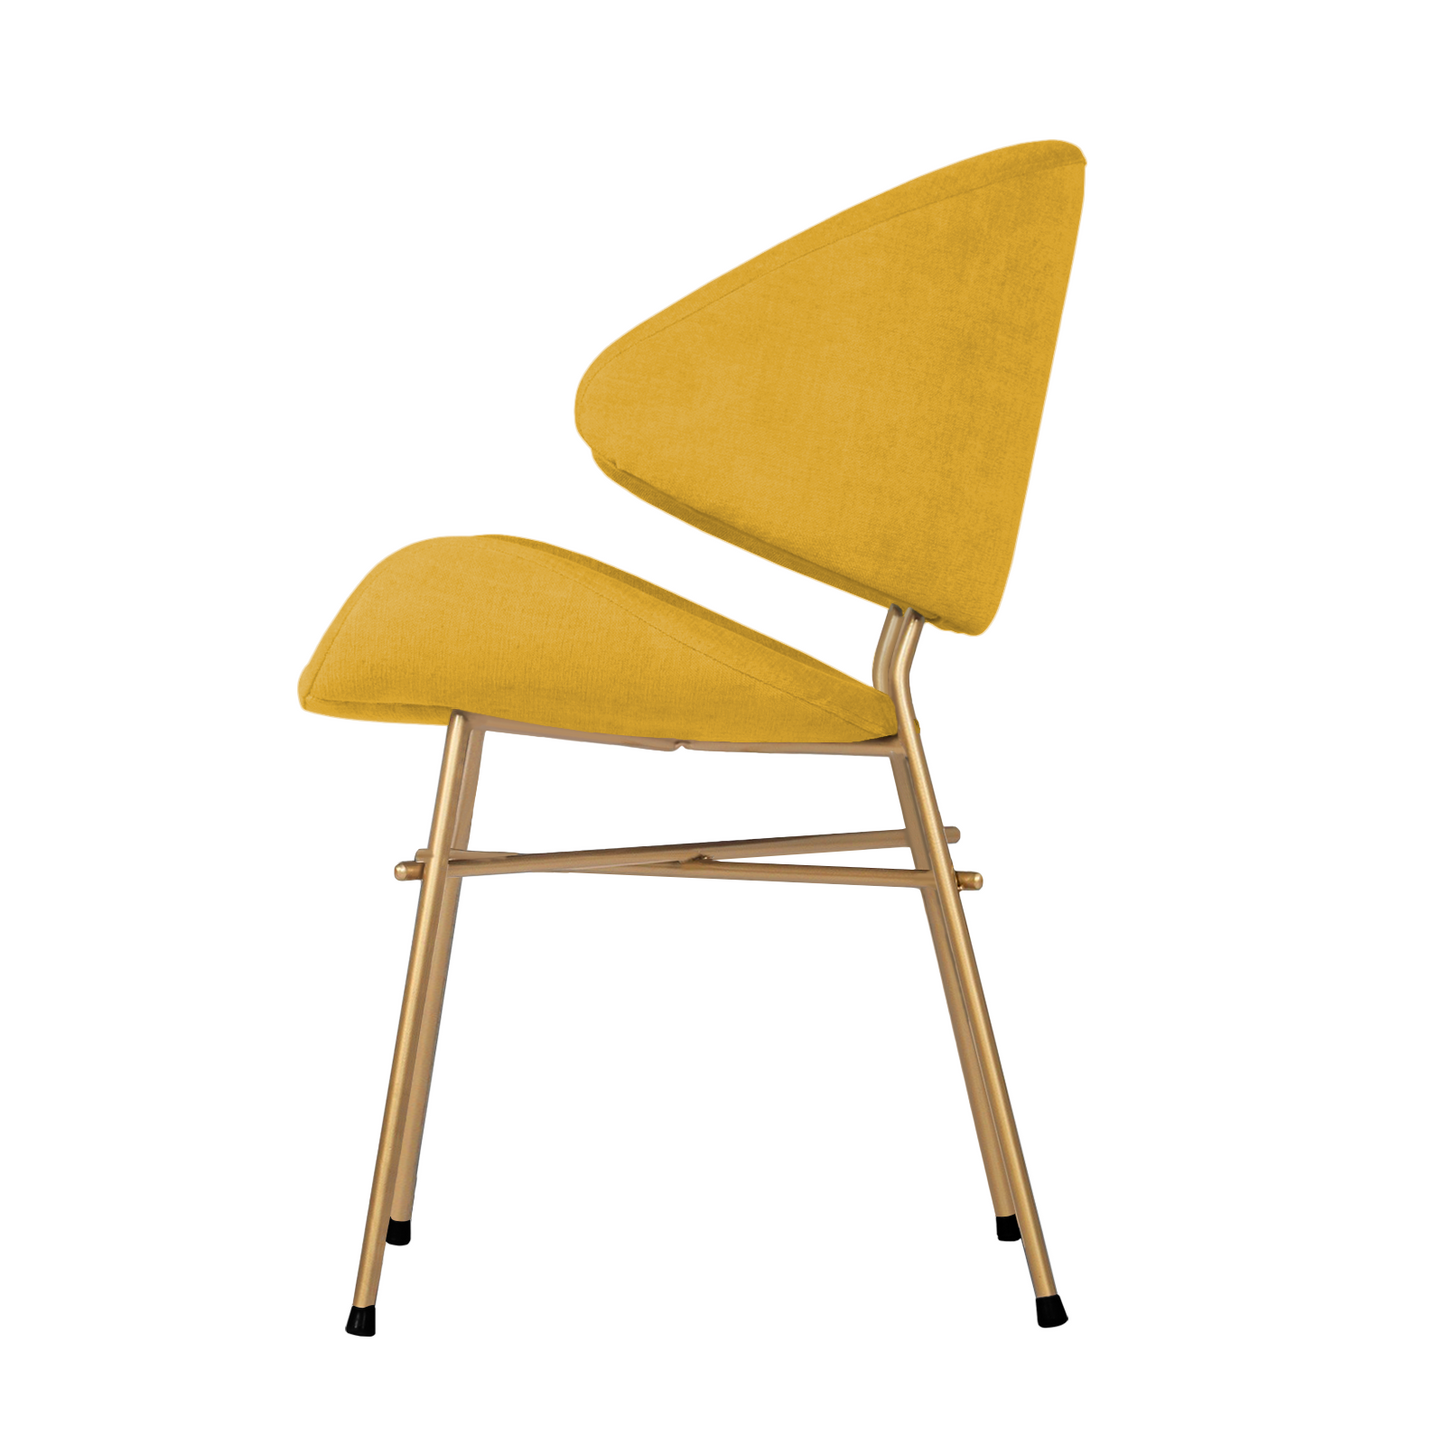 Chair Cheri Trend Gold - Mustard